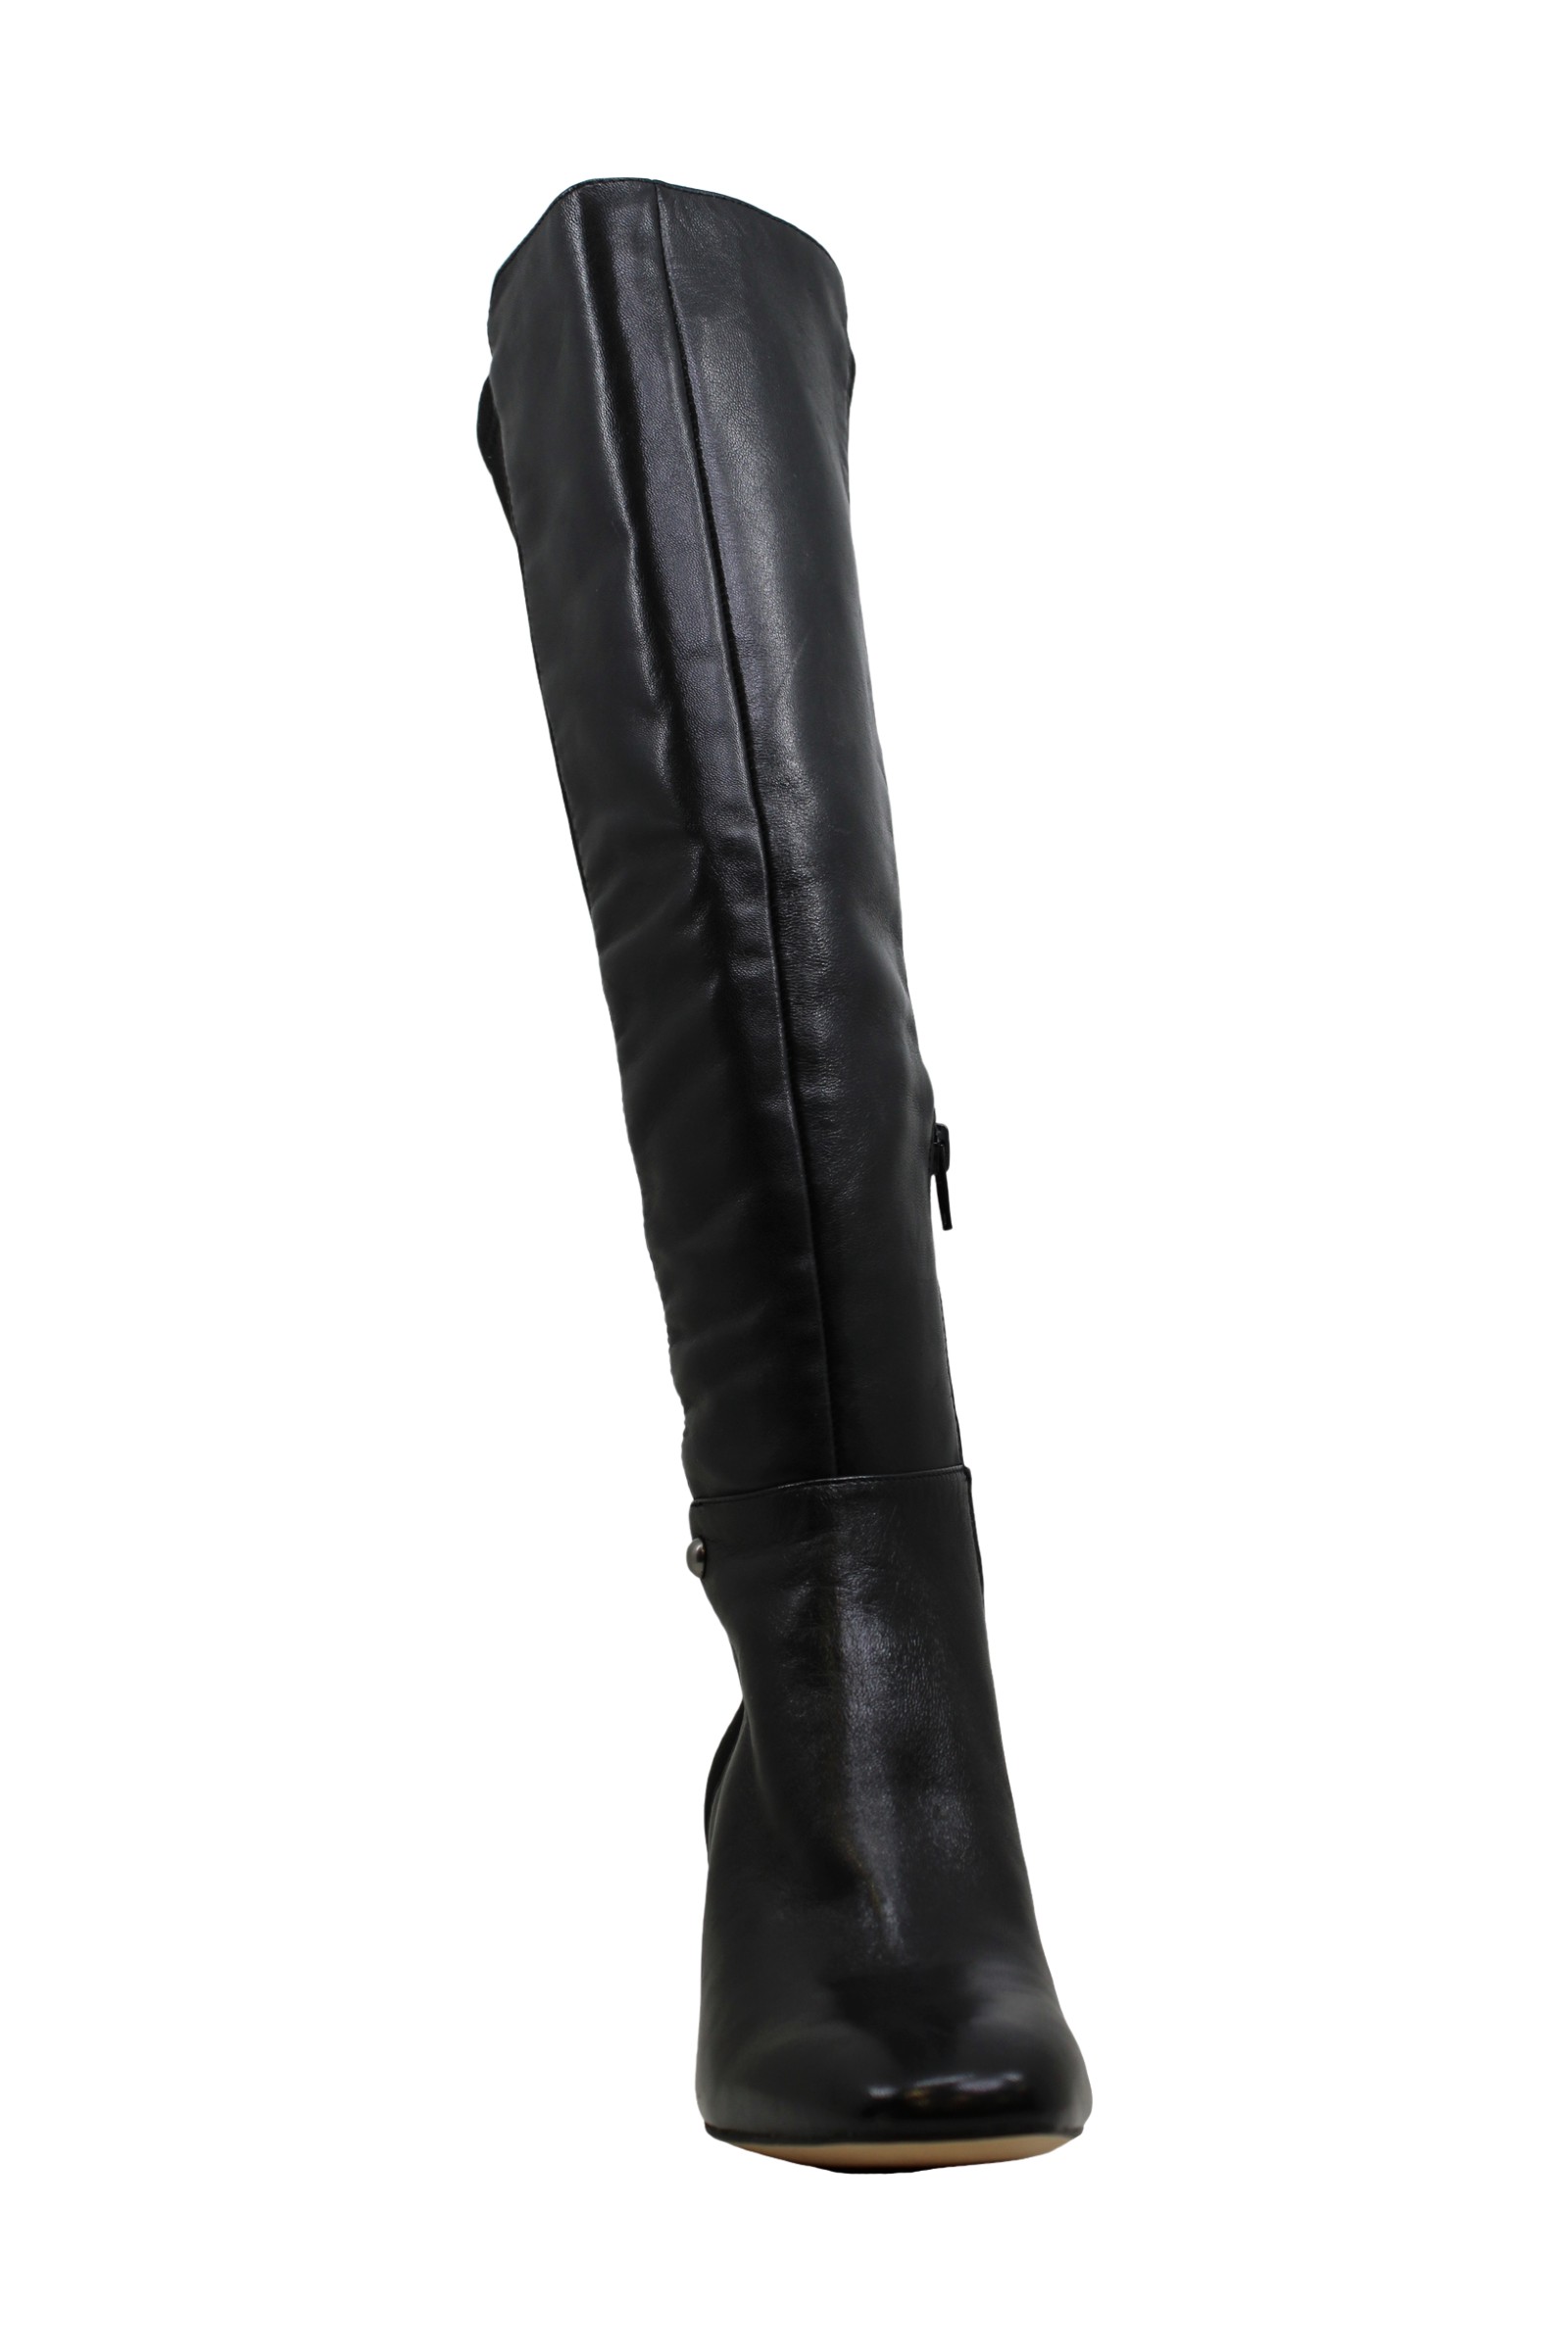 Enzo Angiolini Womens Boots in Black Color, Size 6.5 CII | eBay